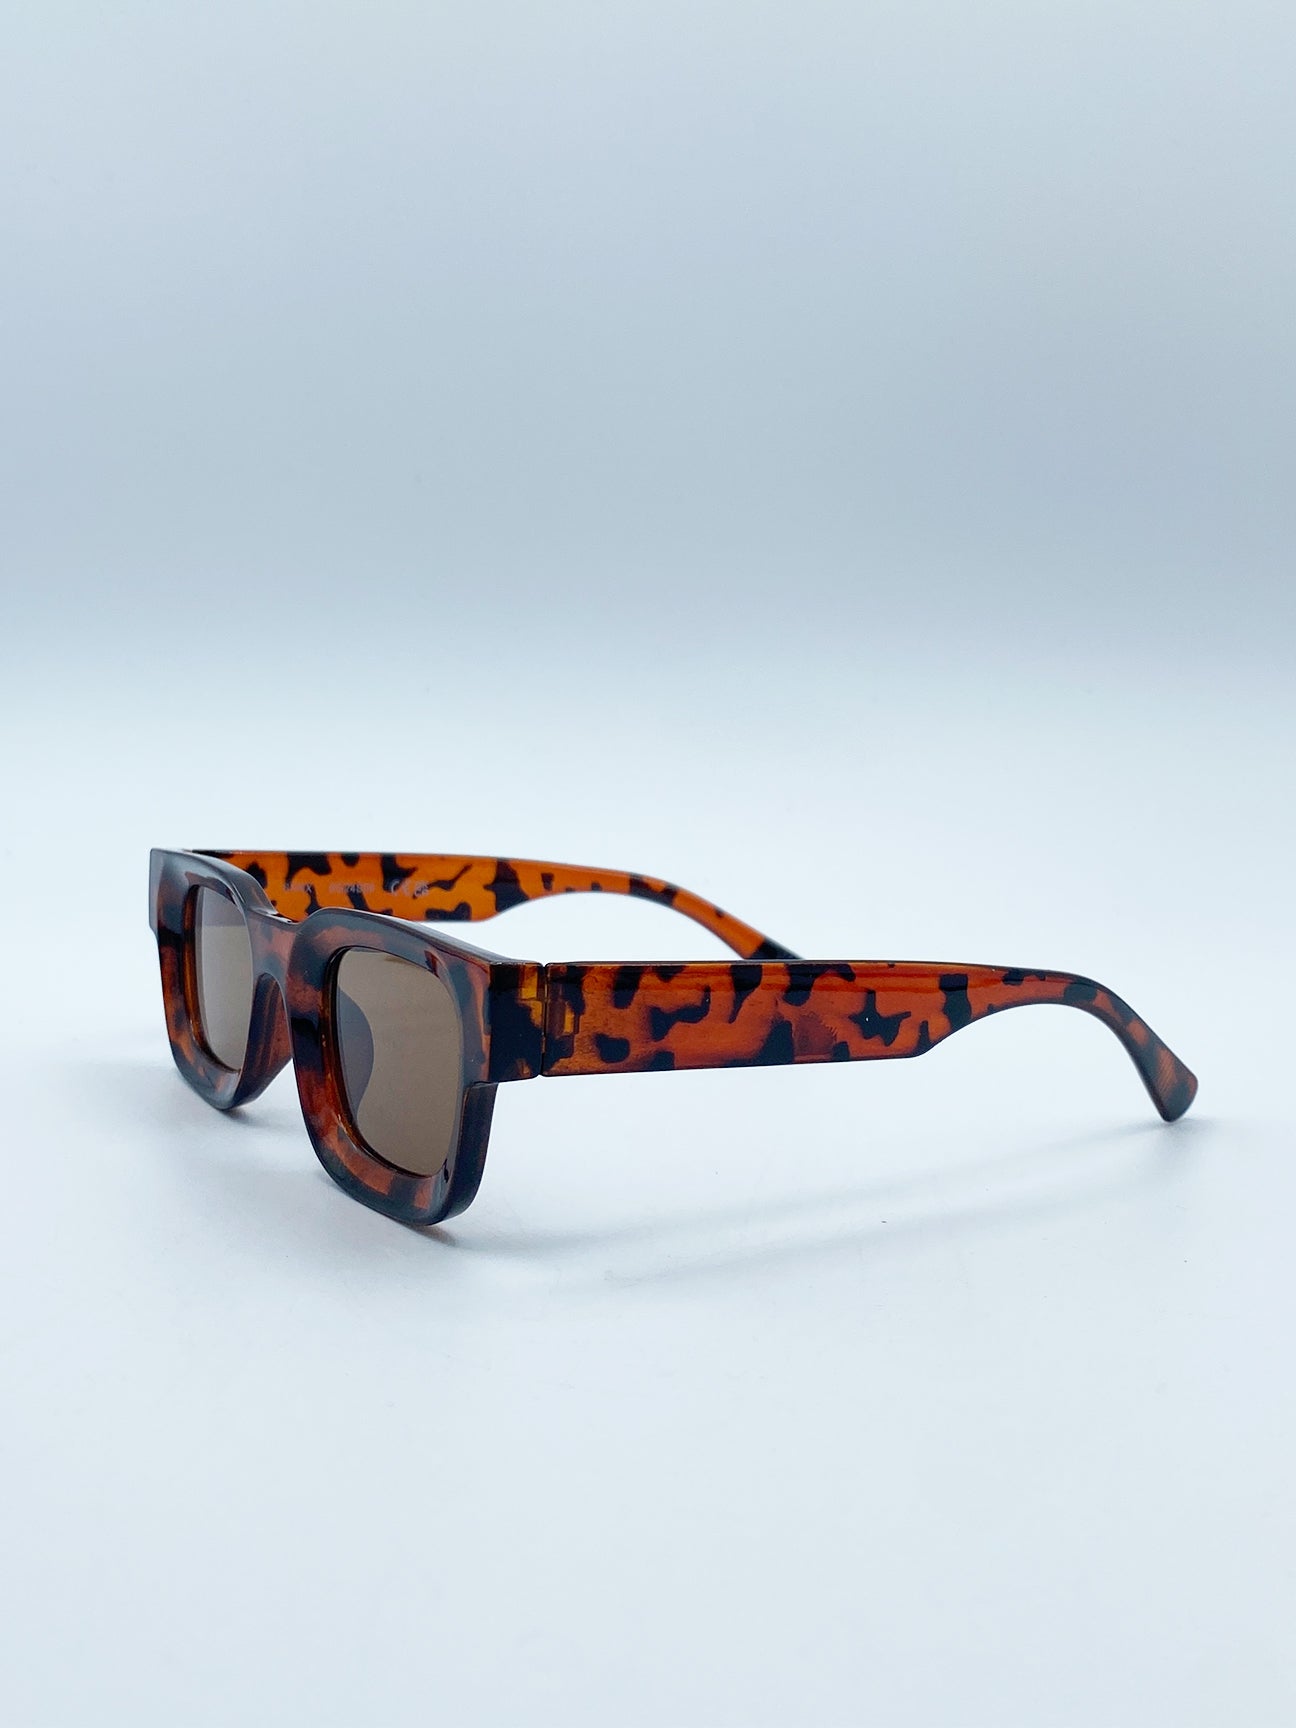 Chunky Square Frame Sunglasses in Tortoiseshell